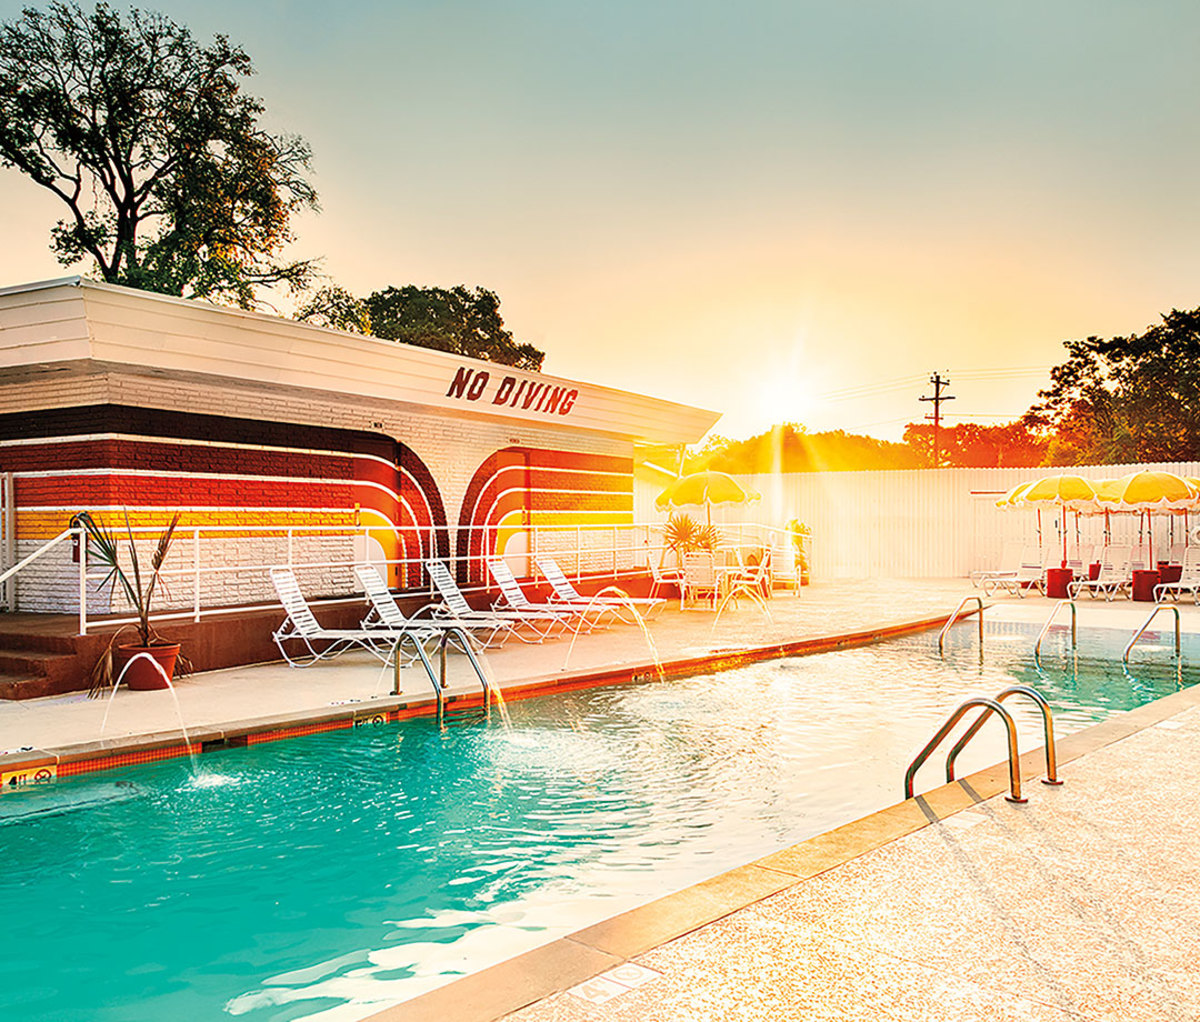 Motel pool at sunset